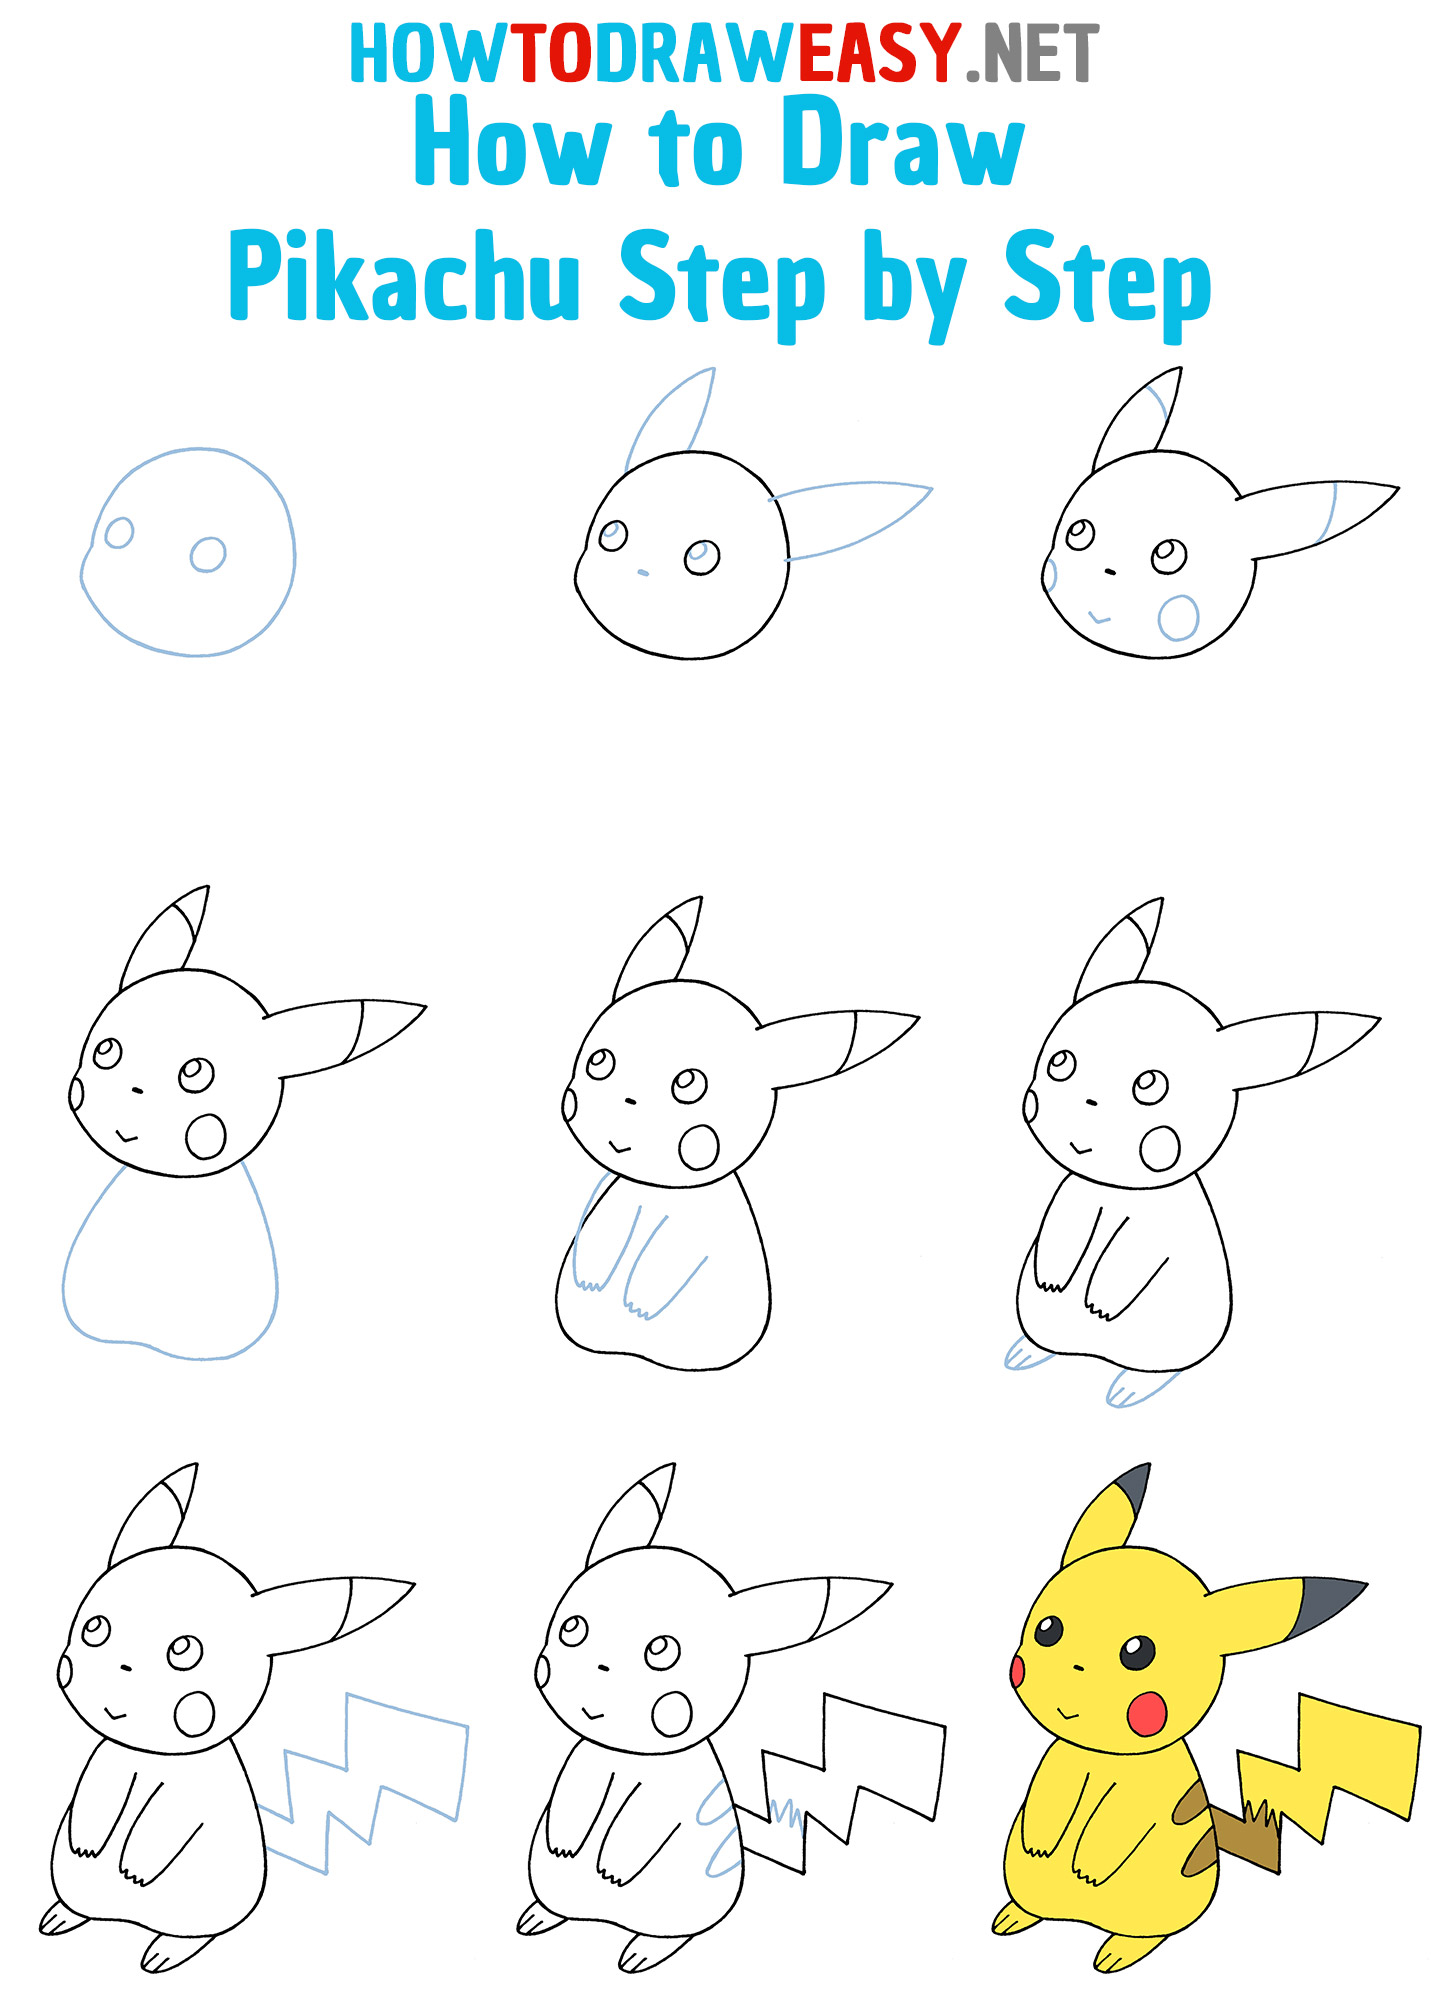 How to Draw Pikachu Step by Step